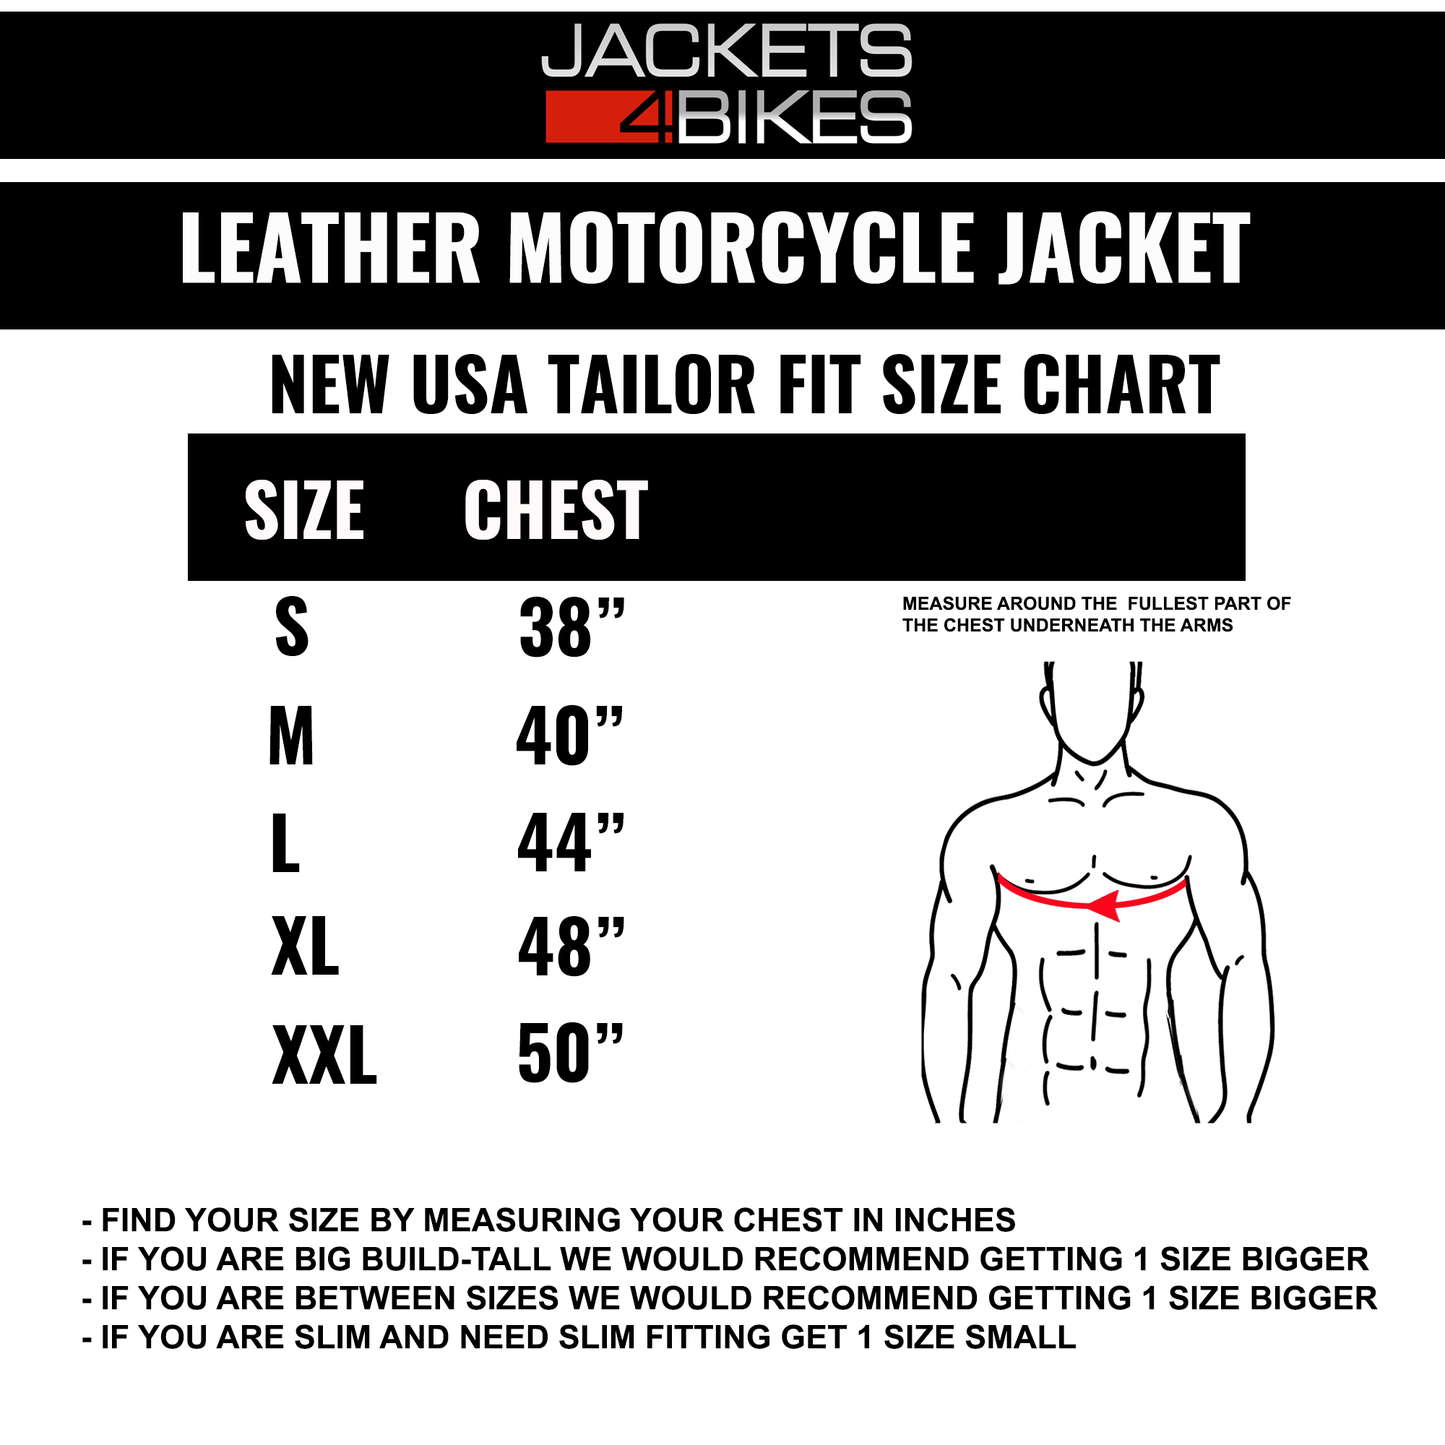 Men's Commuter Premium Natural Buffalo Armor Motorcycle Leather Biker Jacket Tan